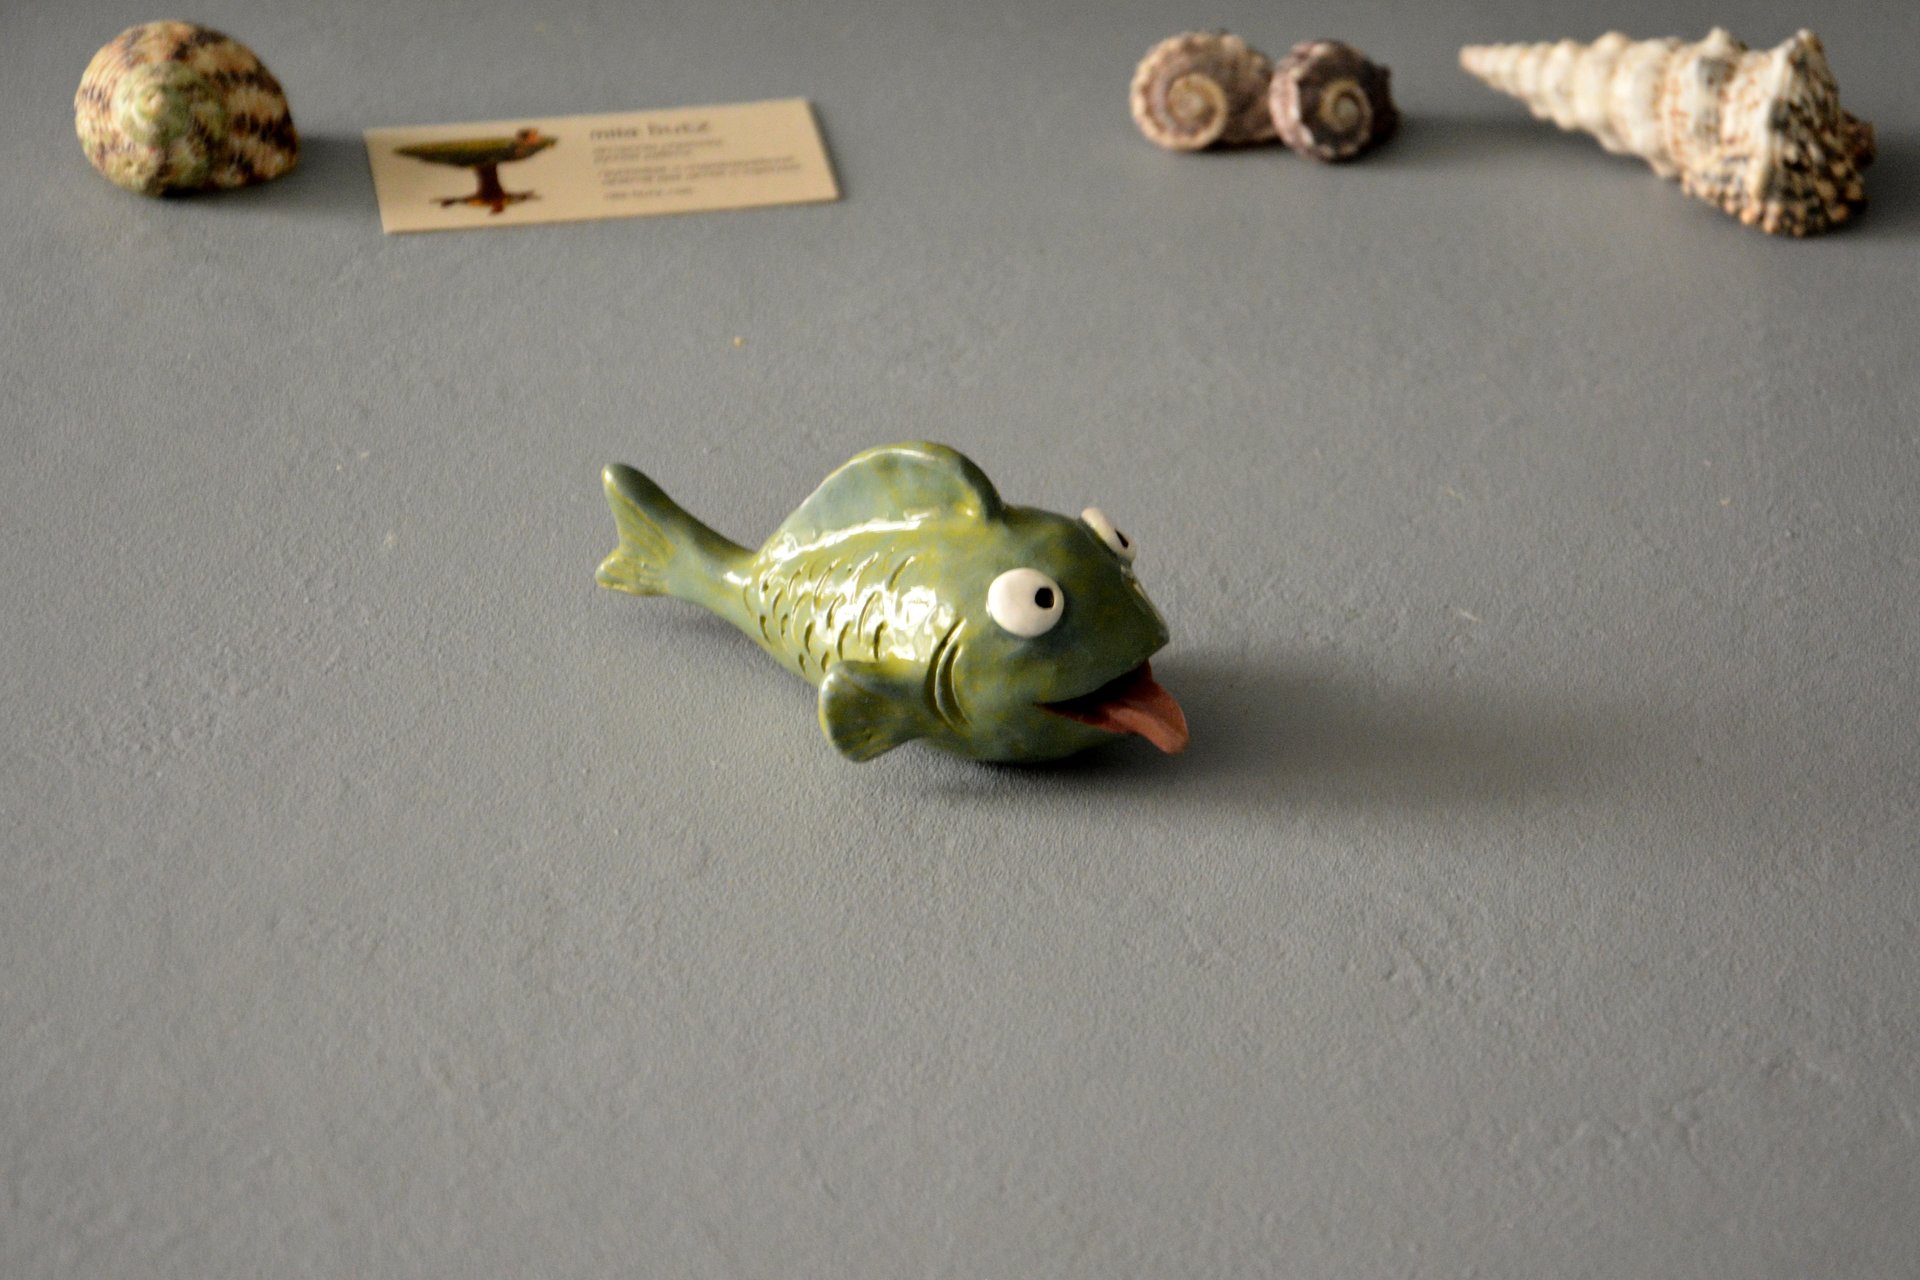 Ceramic fish figurine smiling, length - 12.5 cm, height - 6 cm, photo 4 of 6.